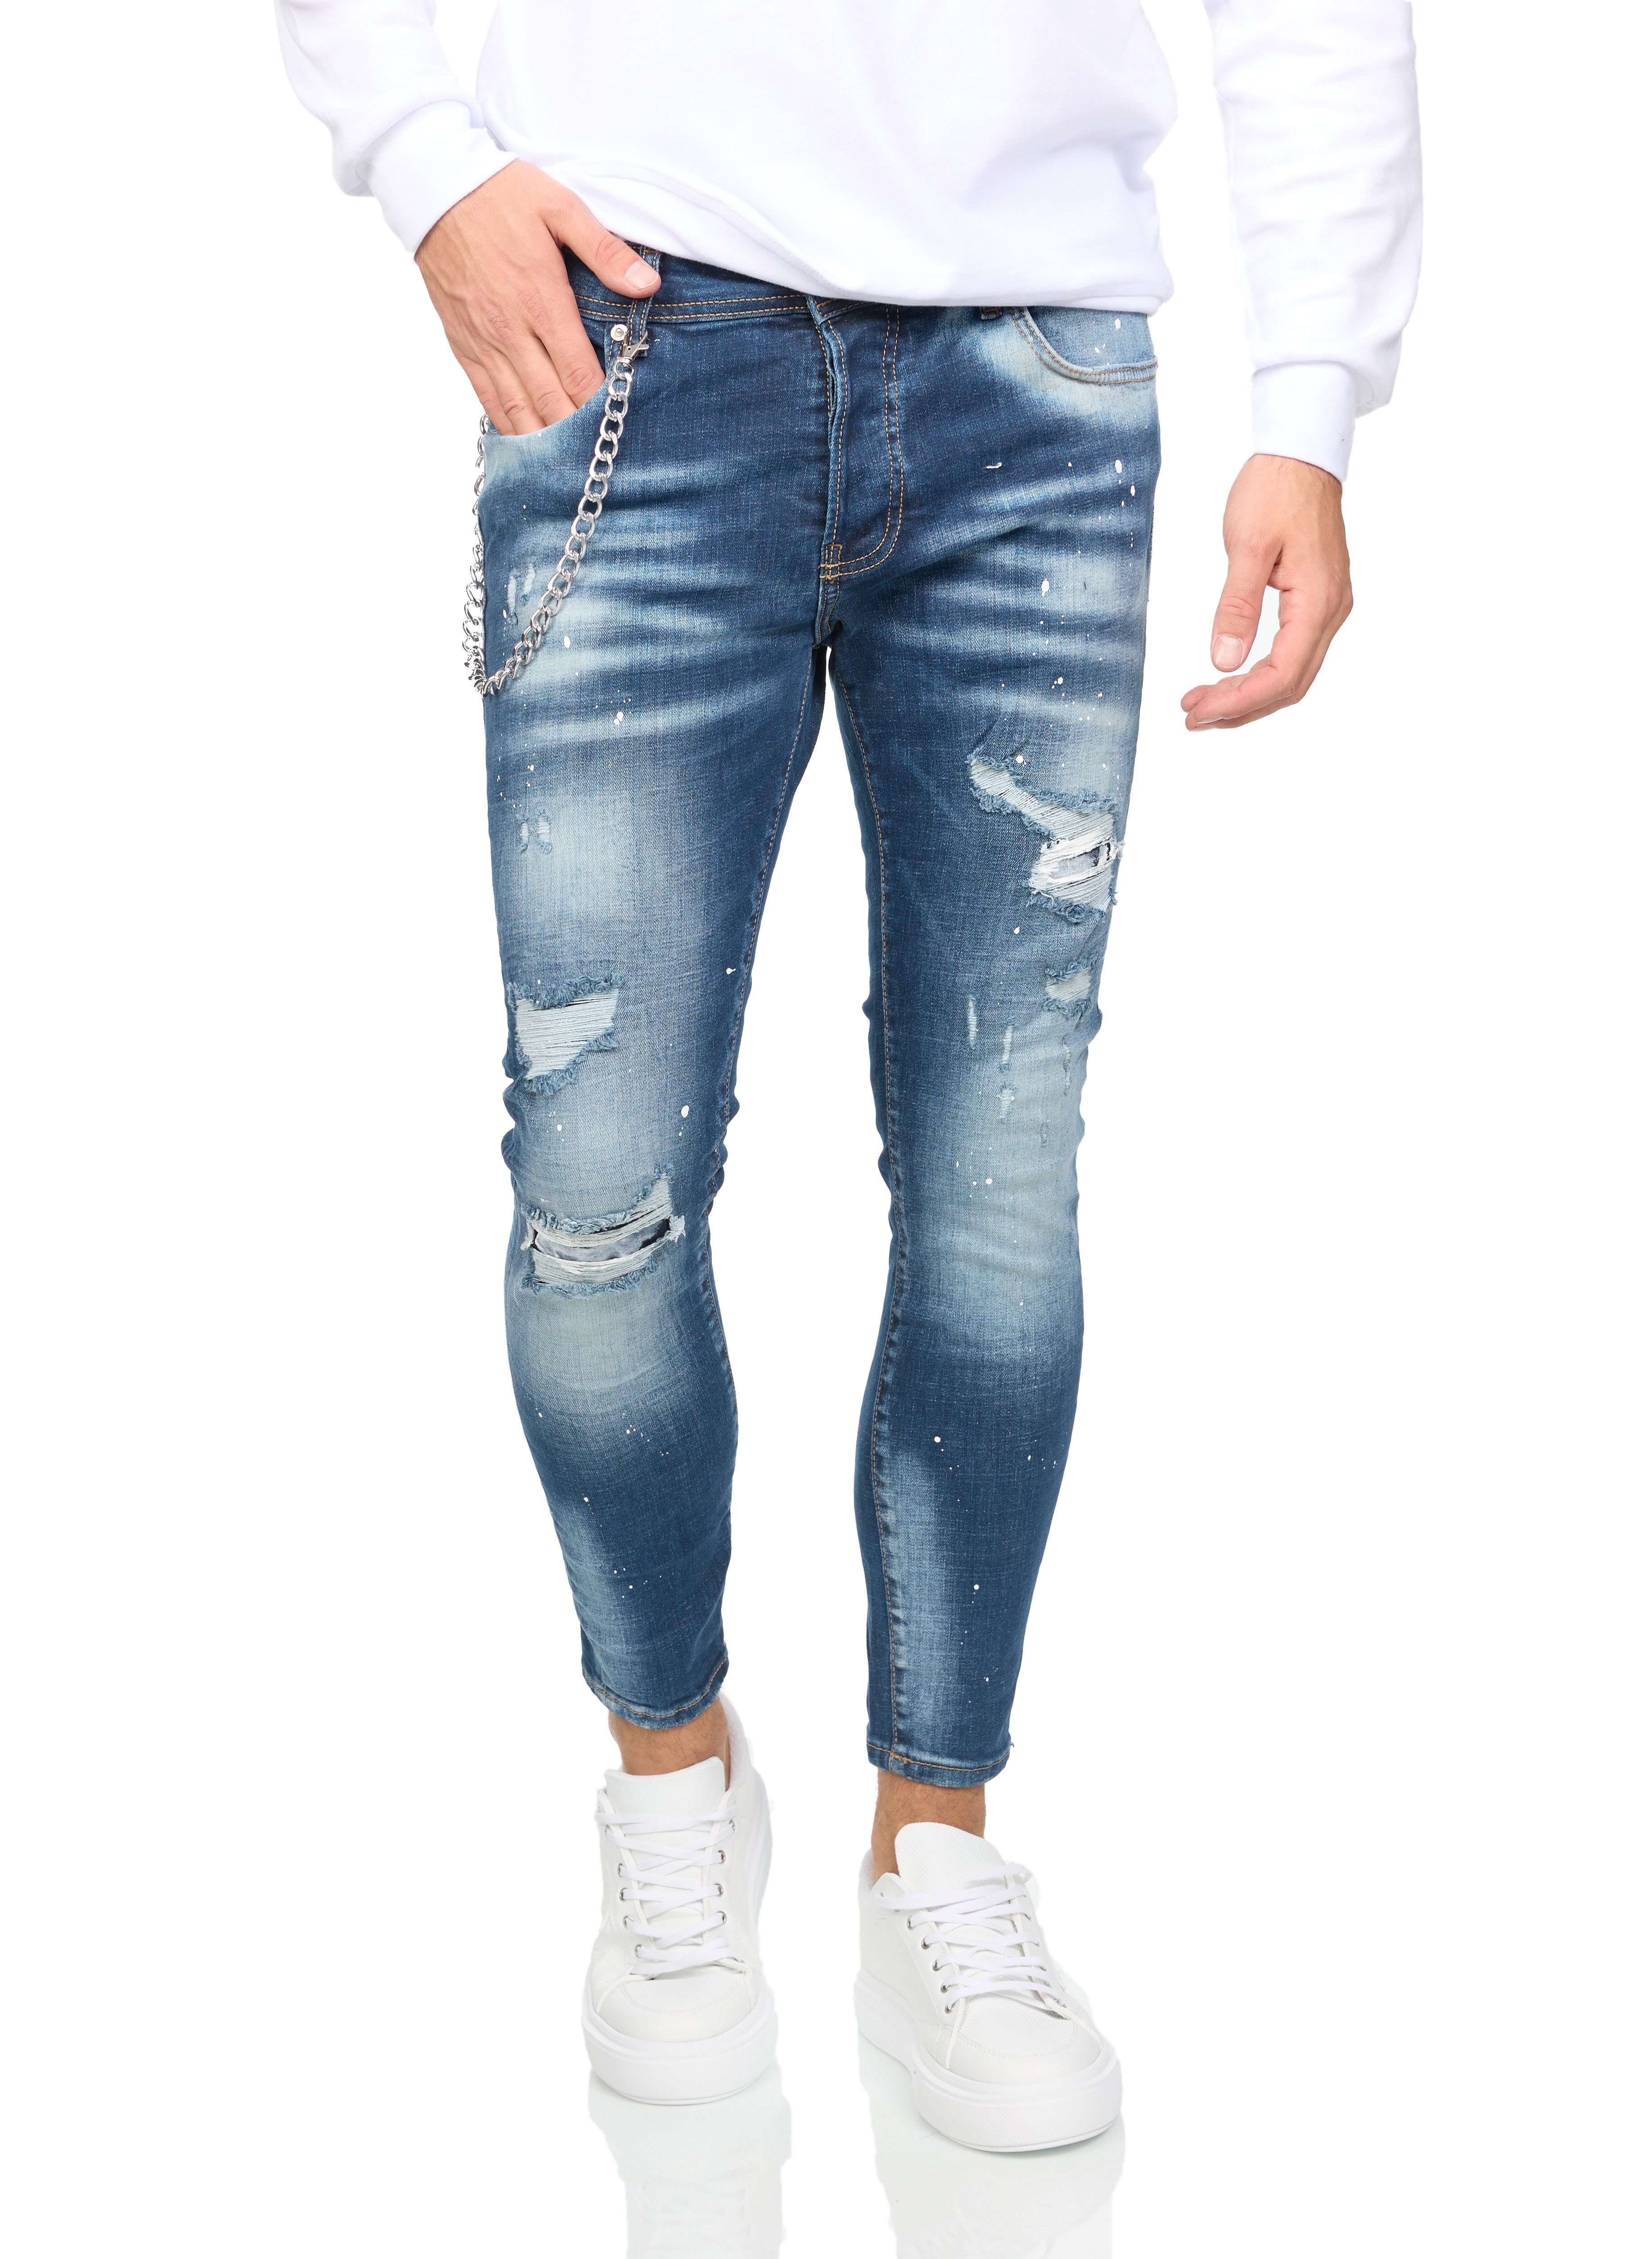 Denim Distriqt Skinny-fit-Jeans Destroyed stretchige DH-BI im Look Skinny Jeans Super 15700